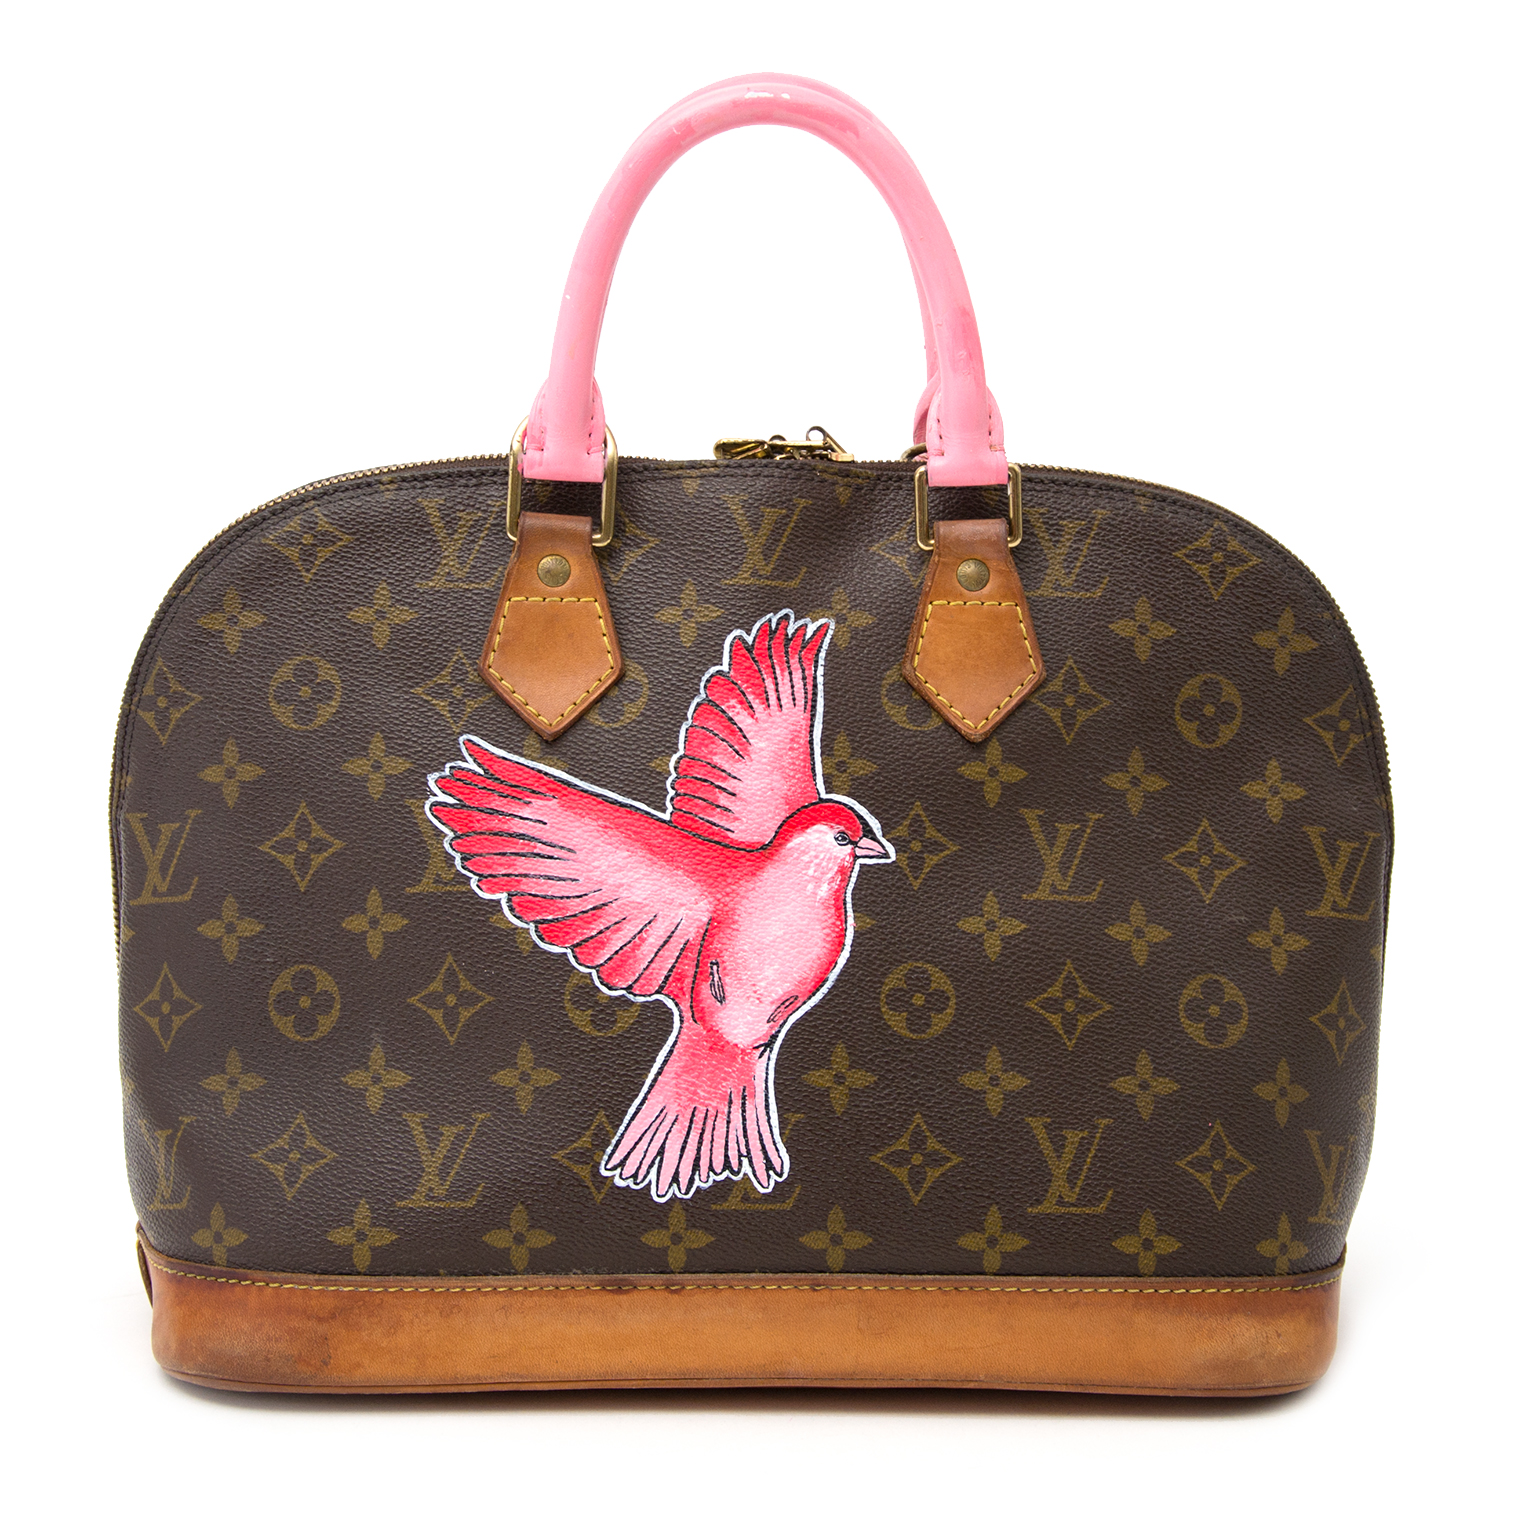 Hand Painted Louis Vuitton Handbag